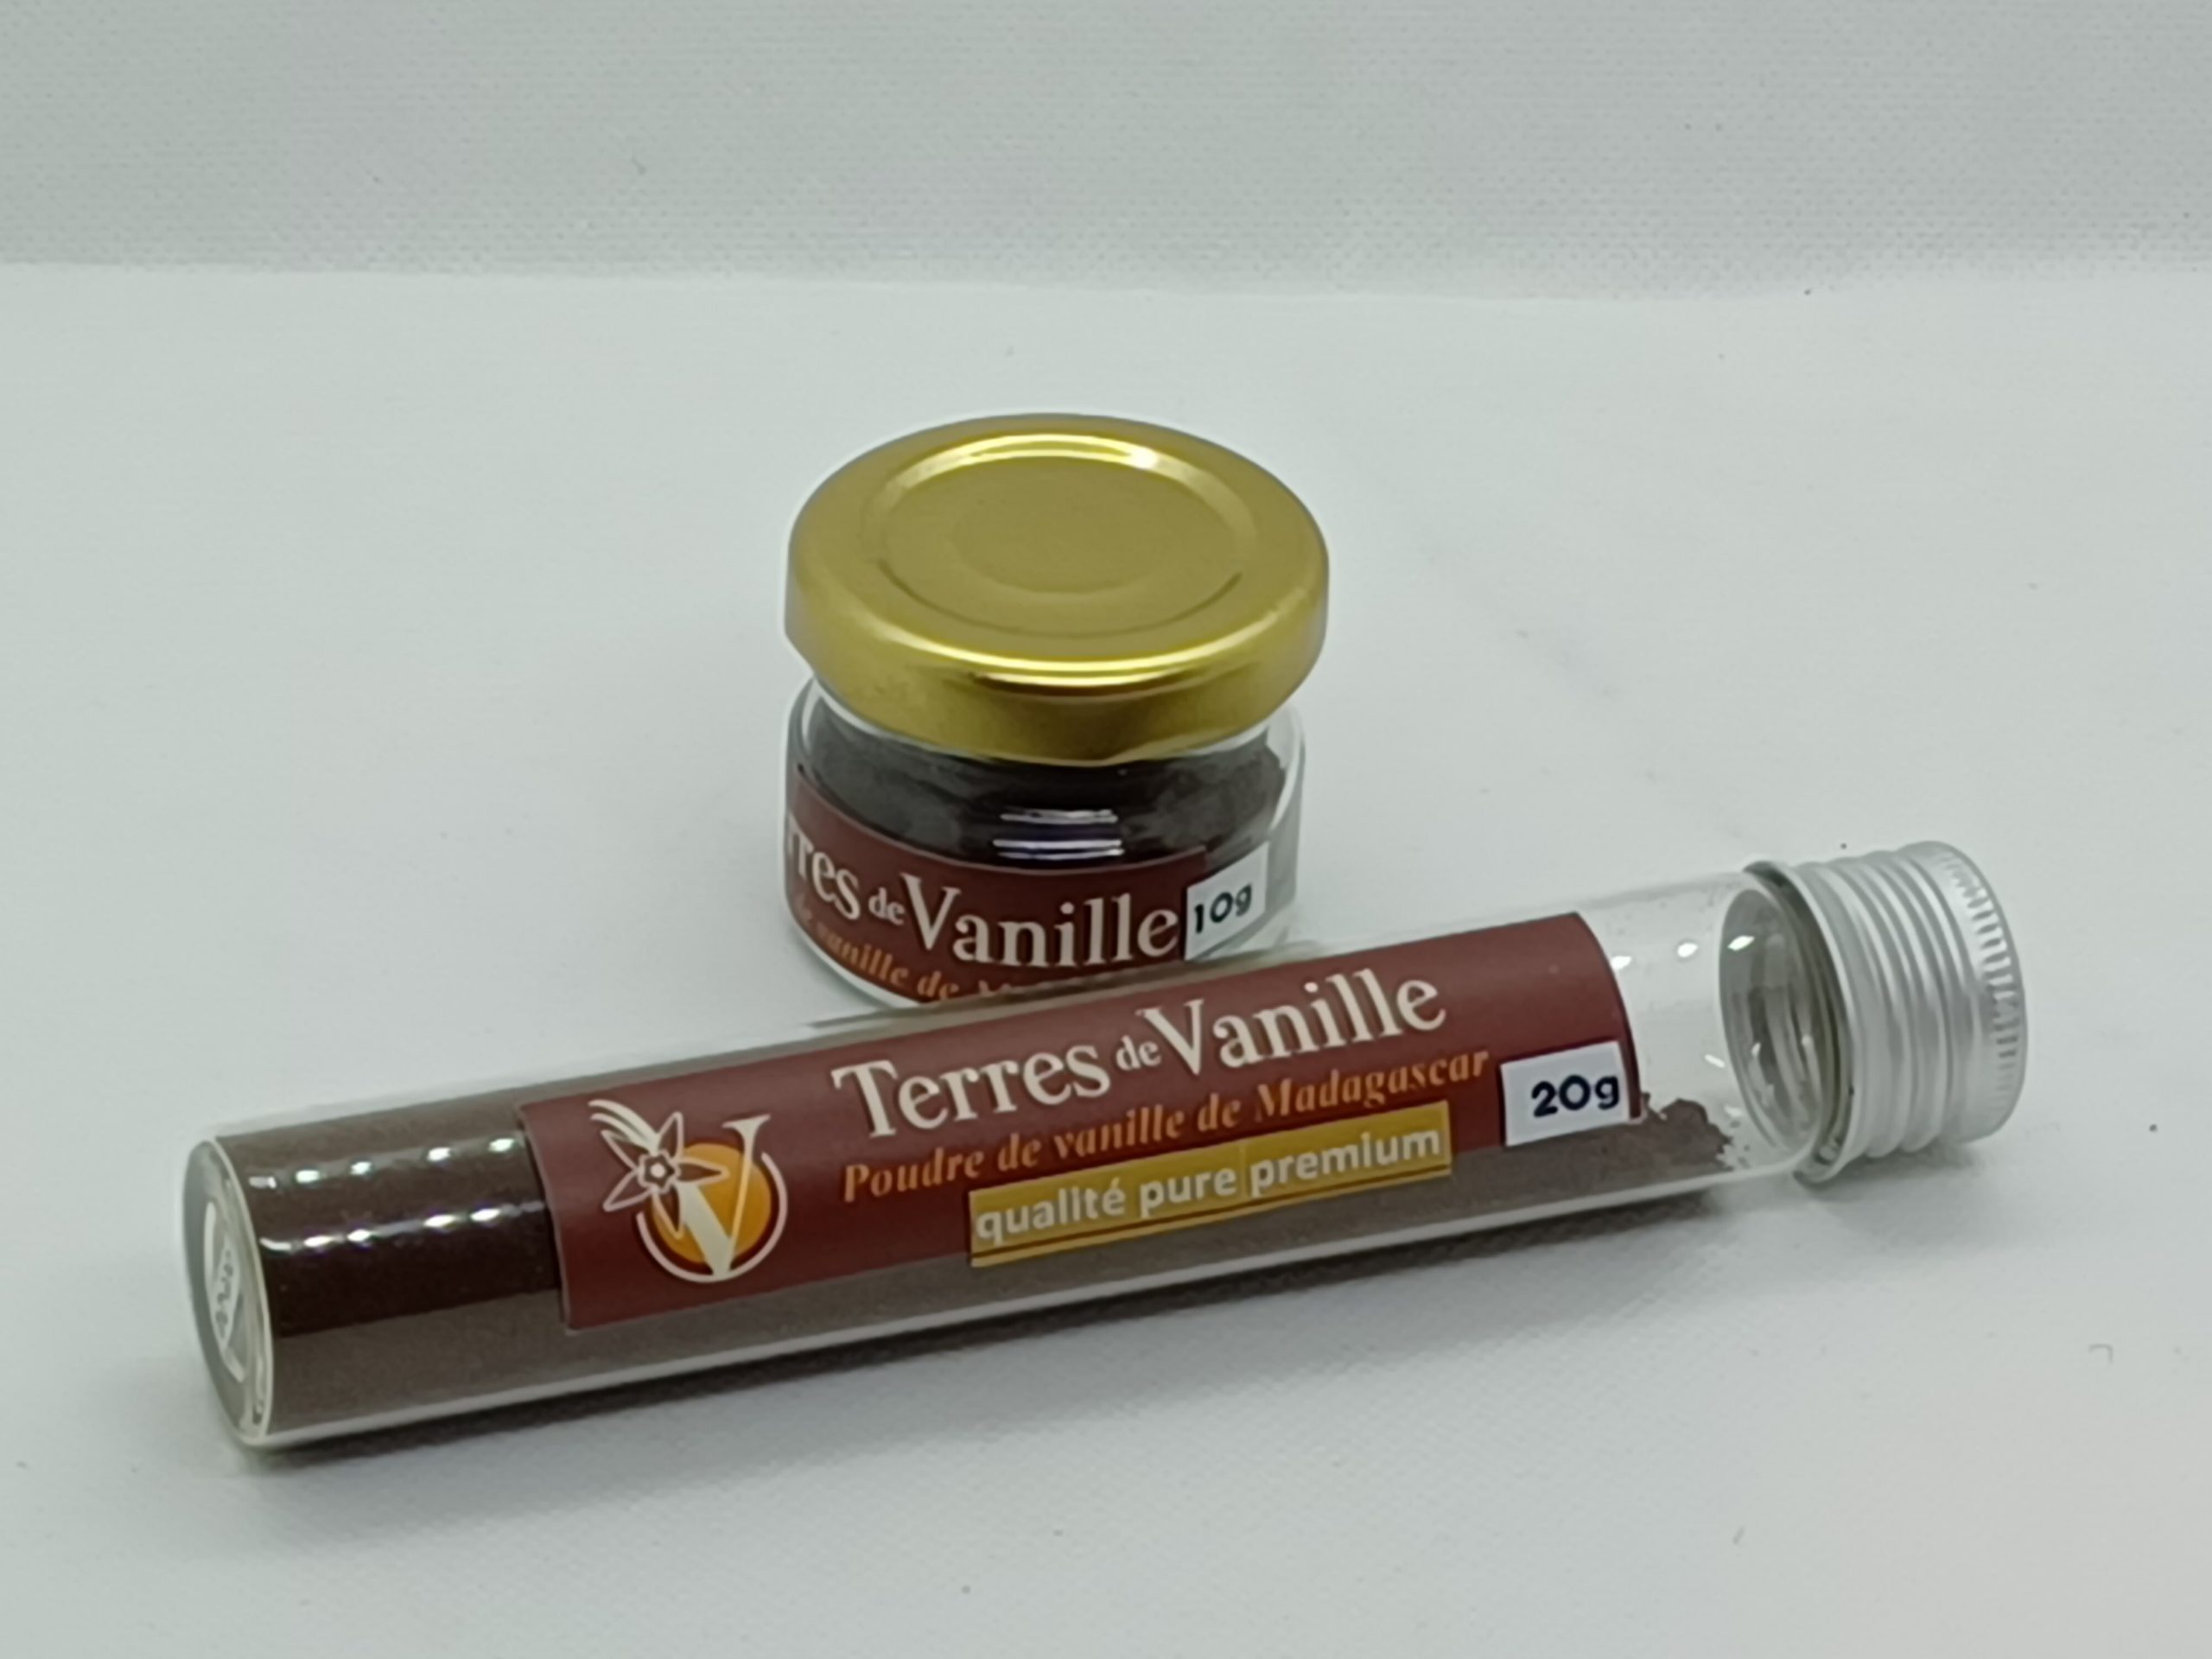 Poudre de vanille standard - Terres de Vanille